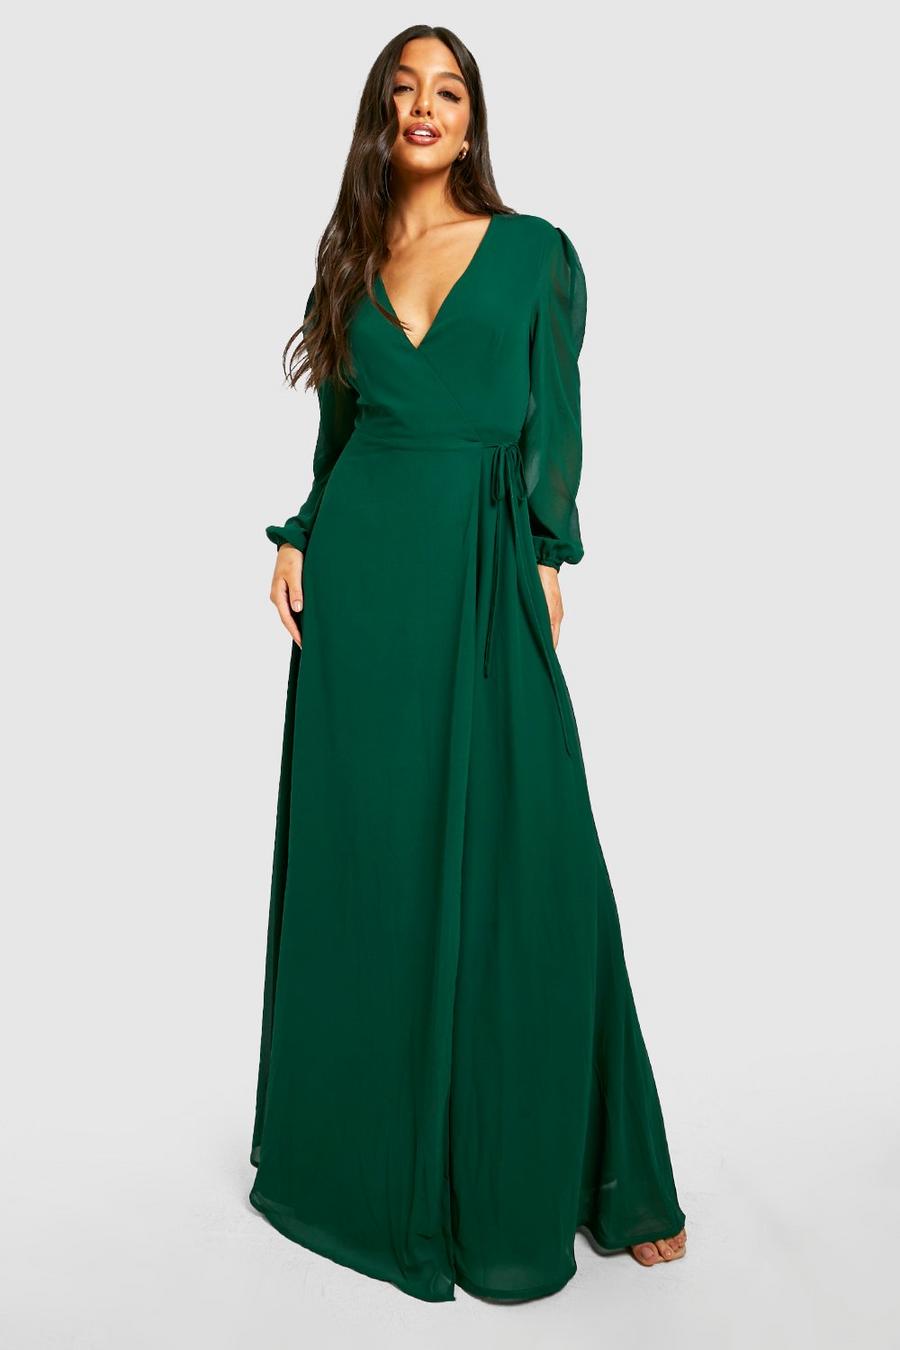 Emerald green Chiffon Bridesmaid Long Sleeve Wrap Dress